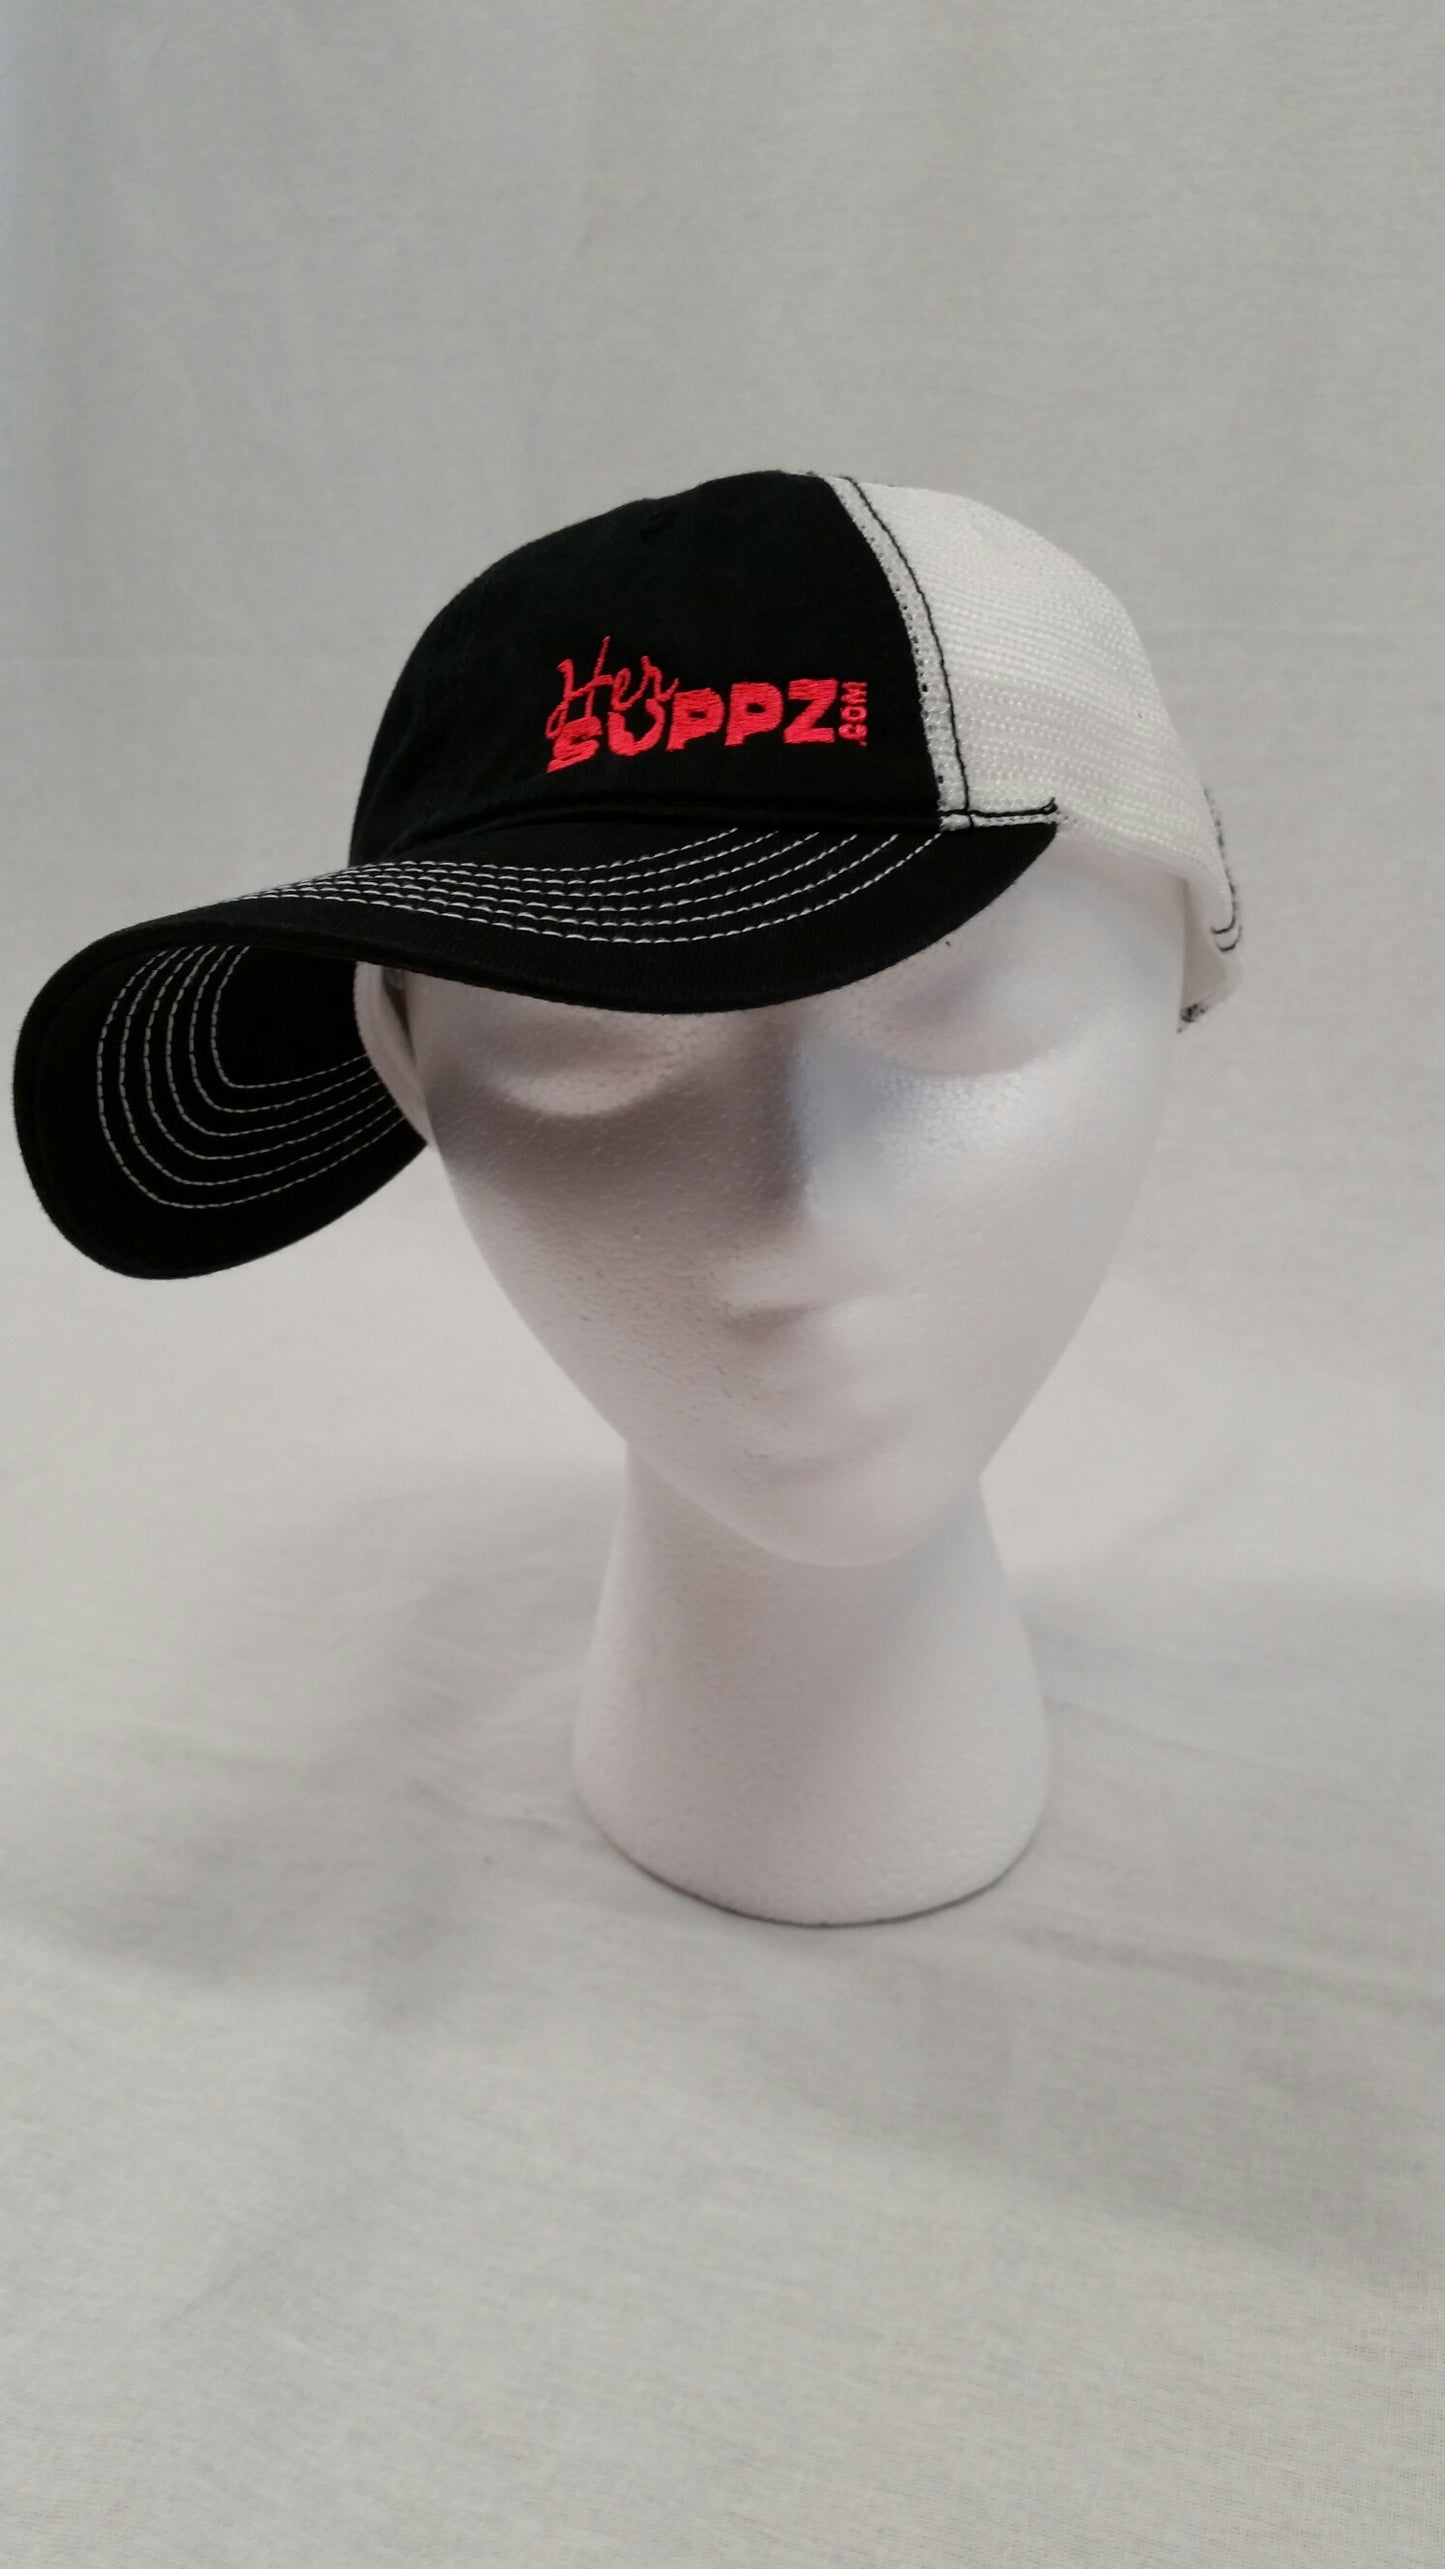 HerSuppz Mesh Back Cap